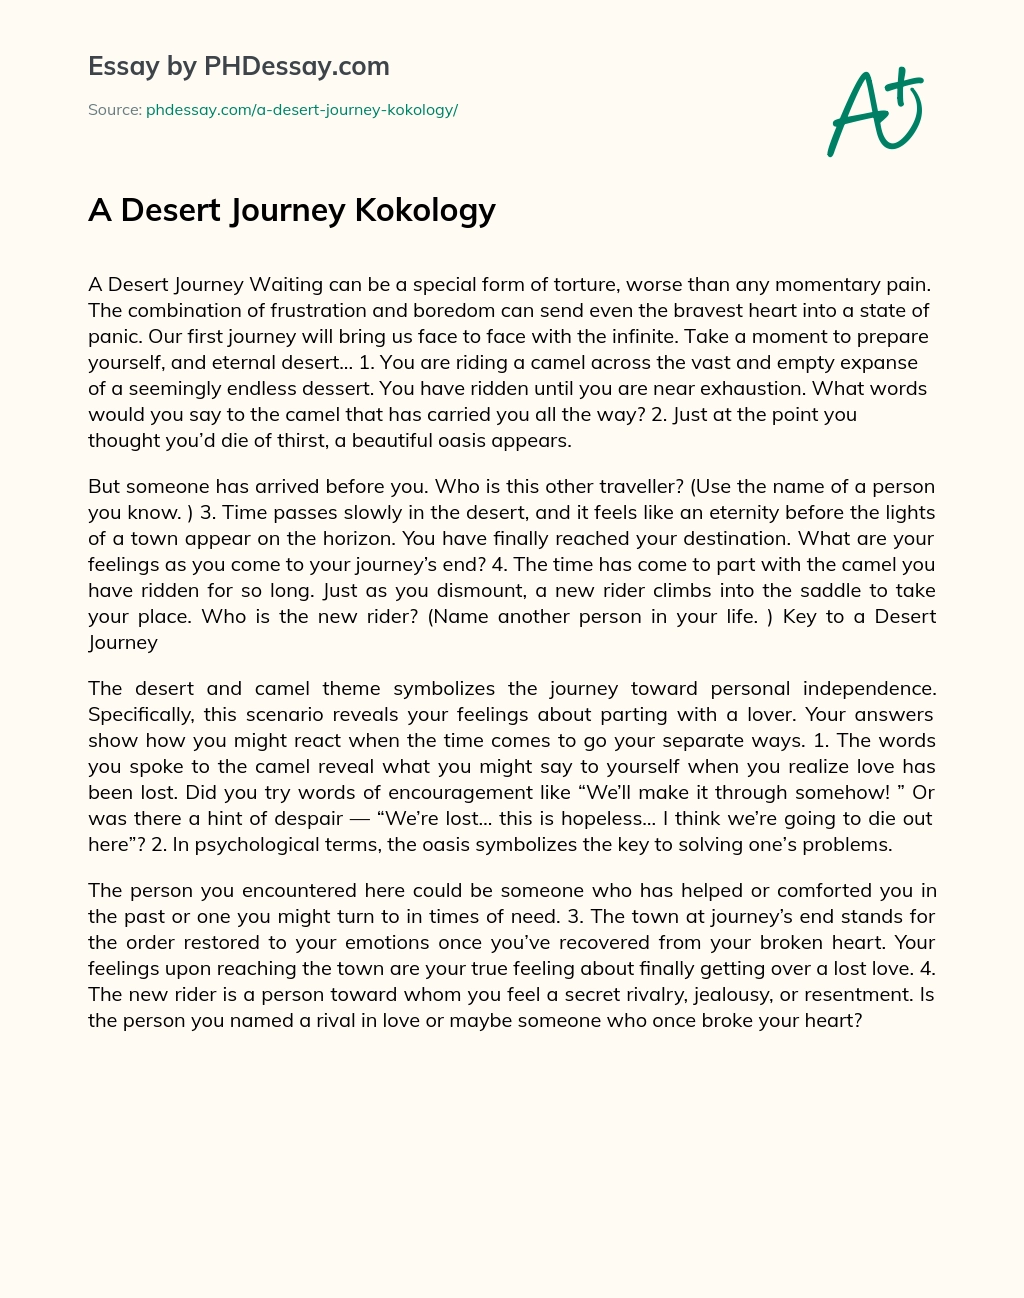 A Desert Journey Kokology essay